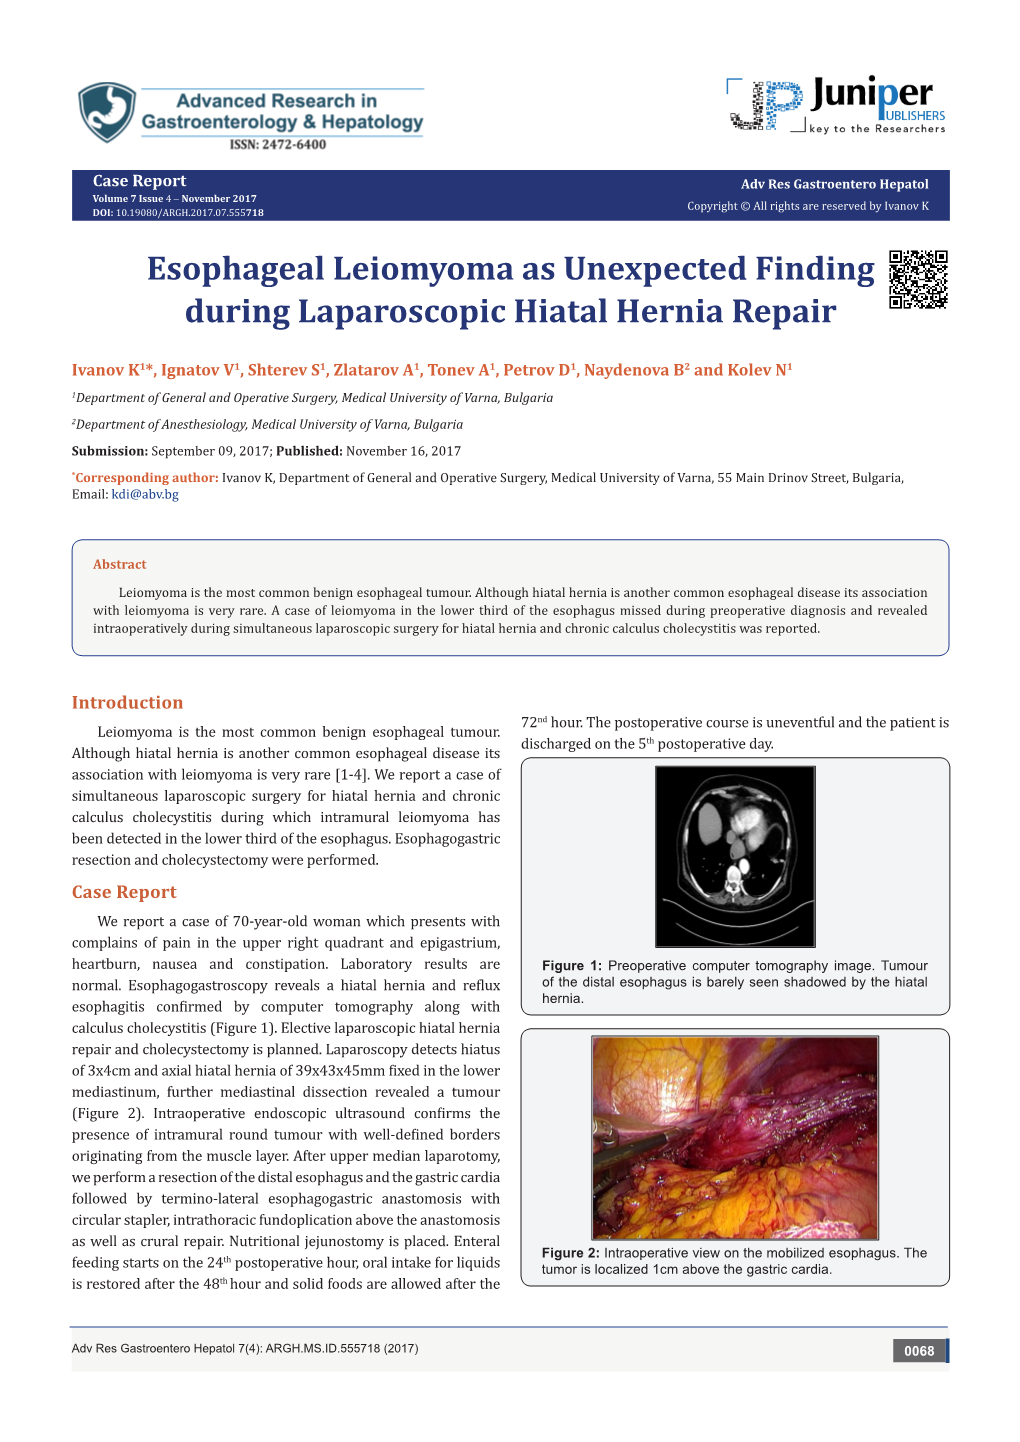 Esophageal Leiomyoma As Unexpected Finding During Laparoscopic Hiatal Hernia Repair